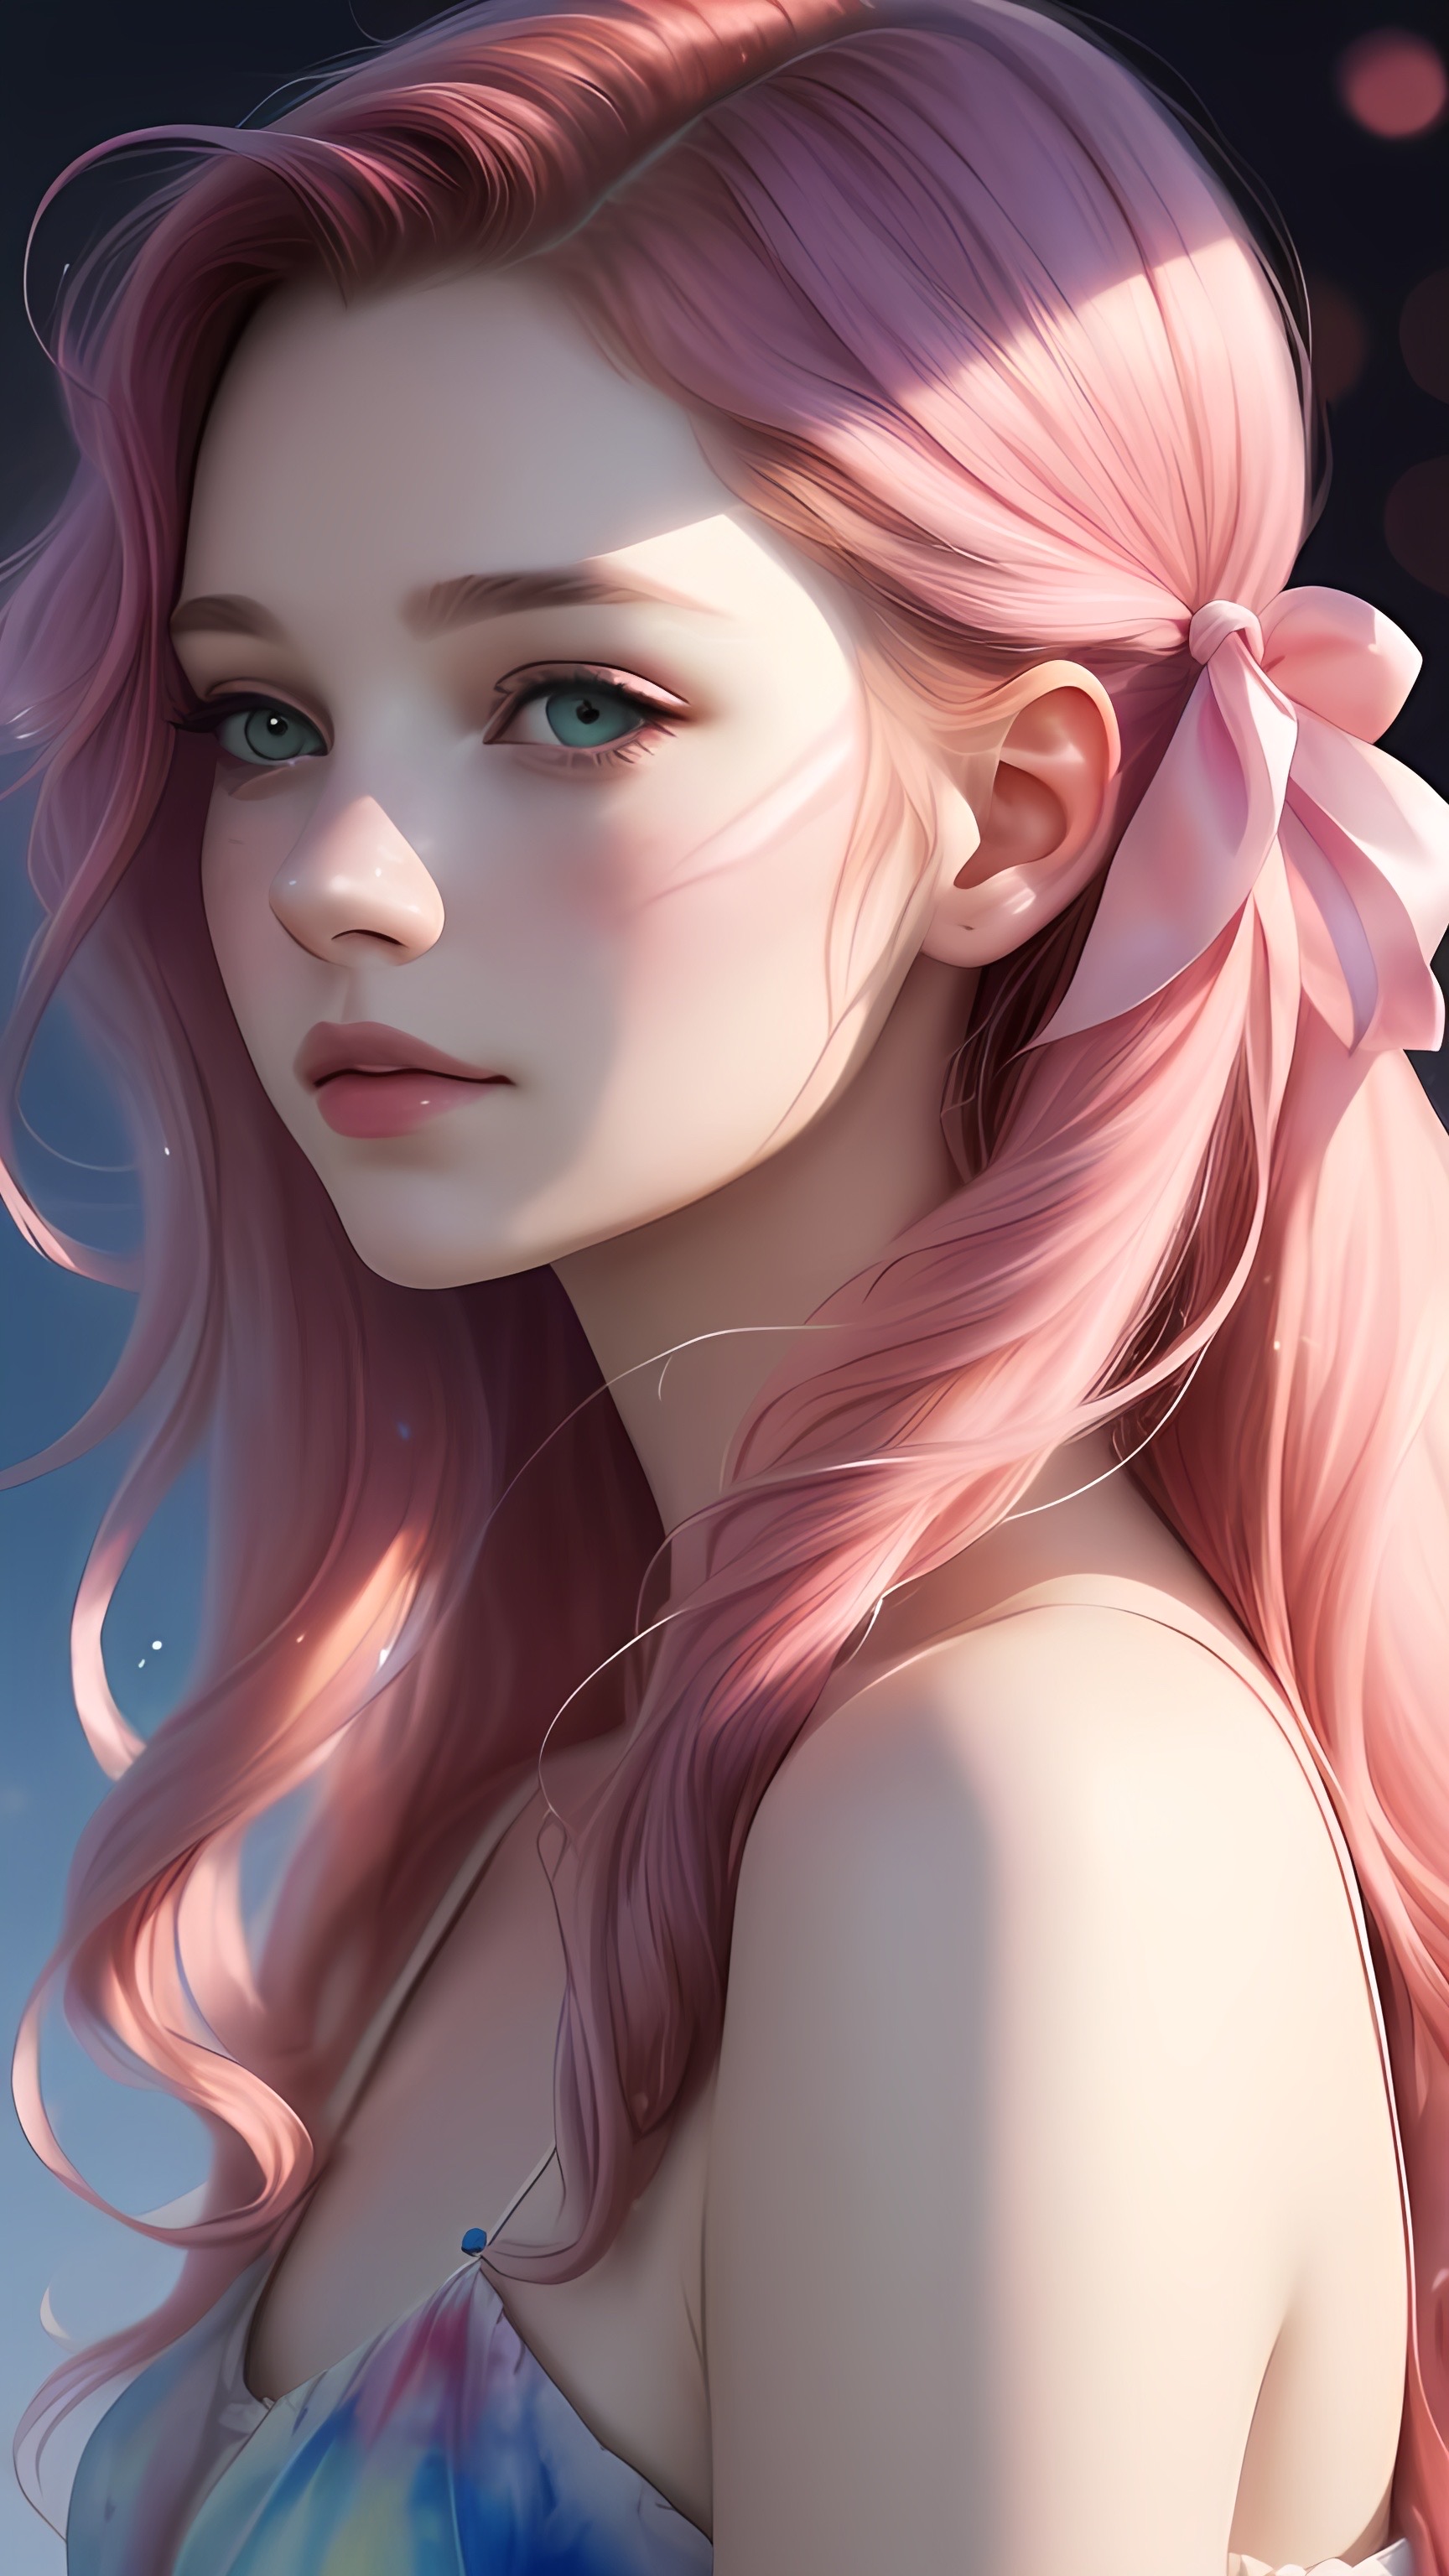 Beautiful pink hair babe by CyberKillersArt on DeviantArt